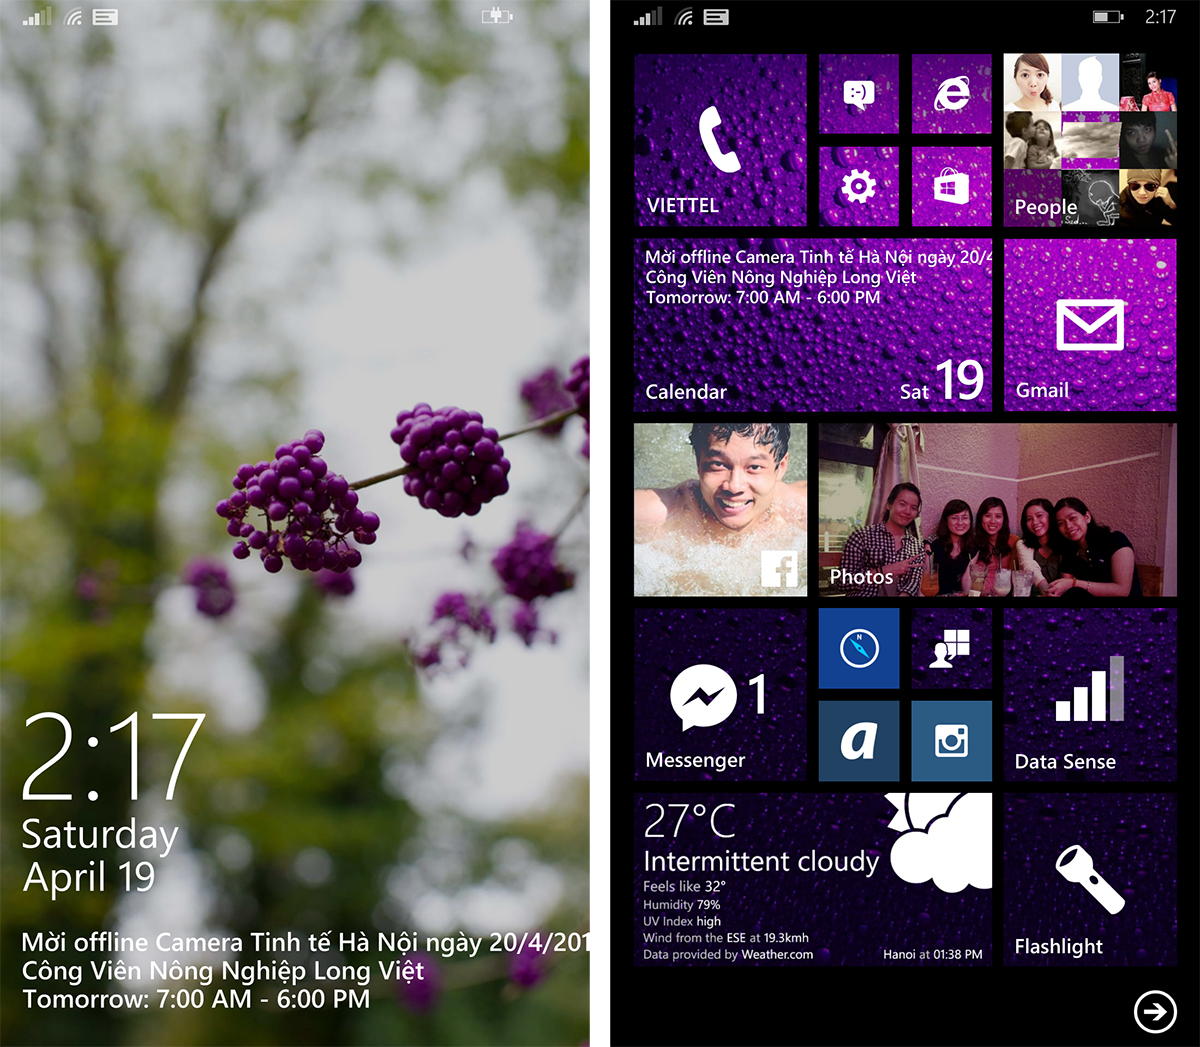 Mẫu Windows Phone giá rẻ Lumia 435 lộ diện